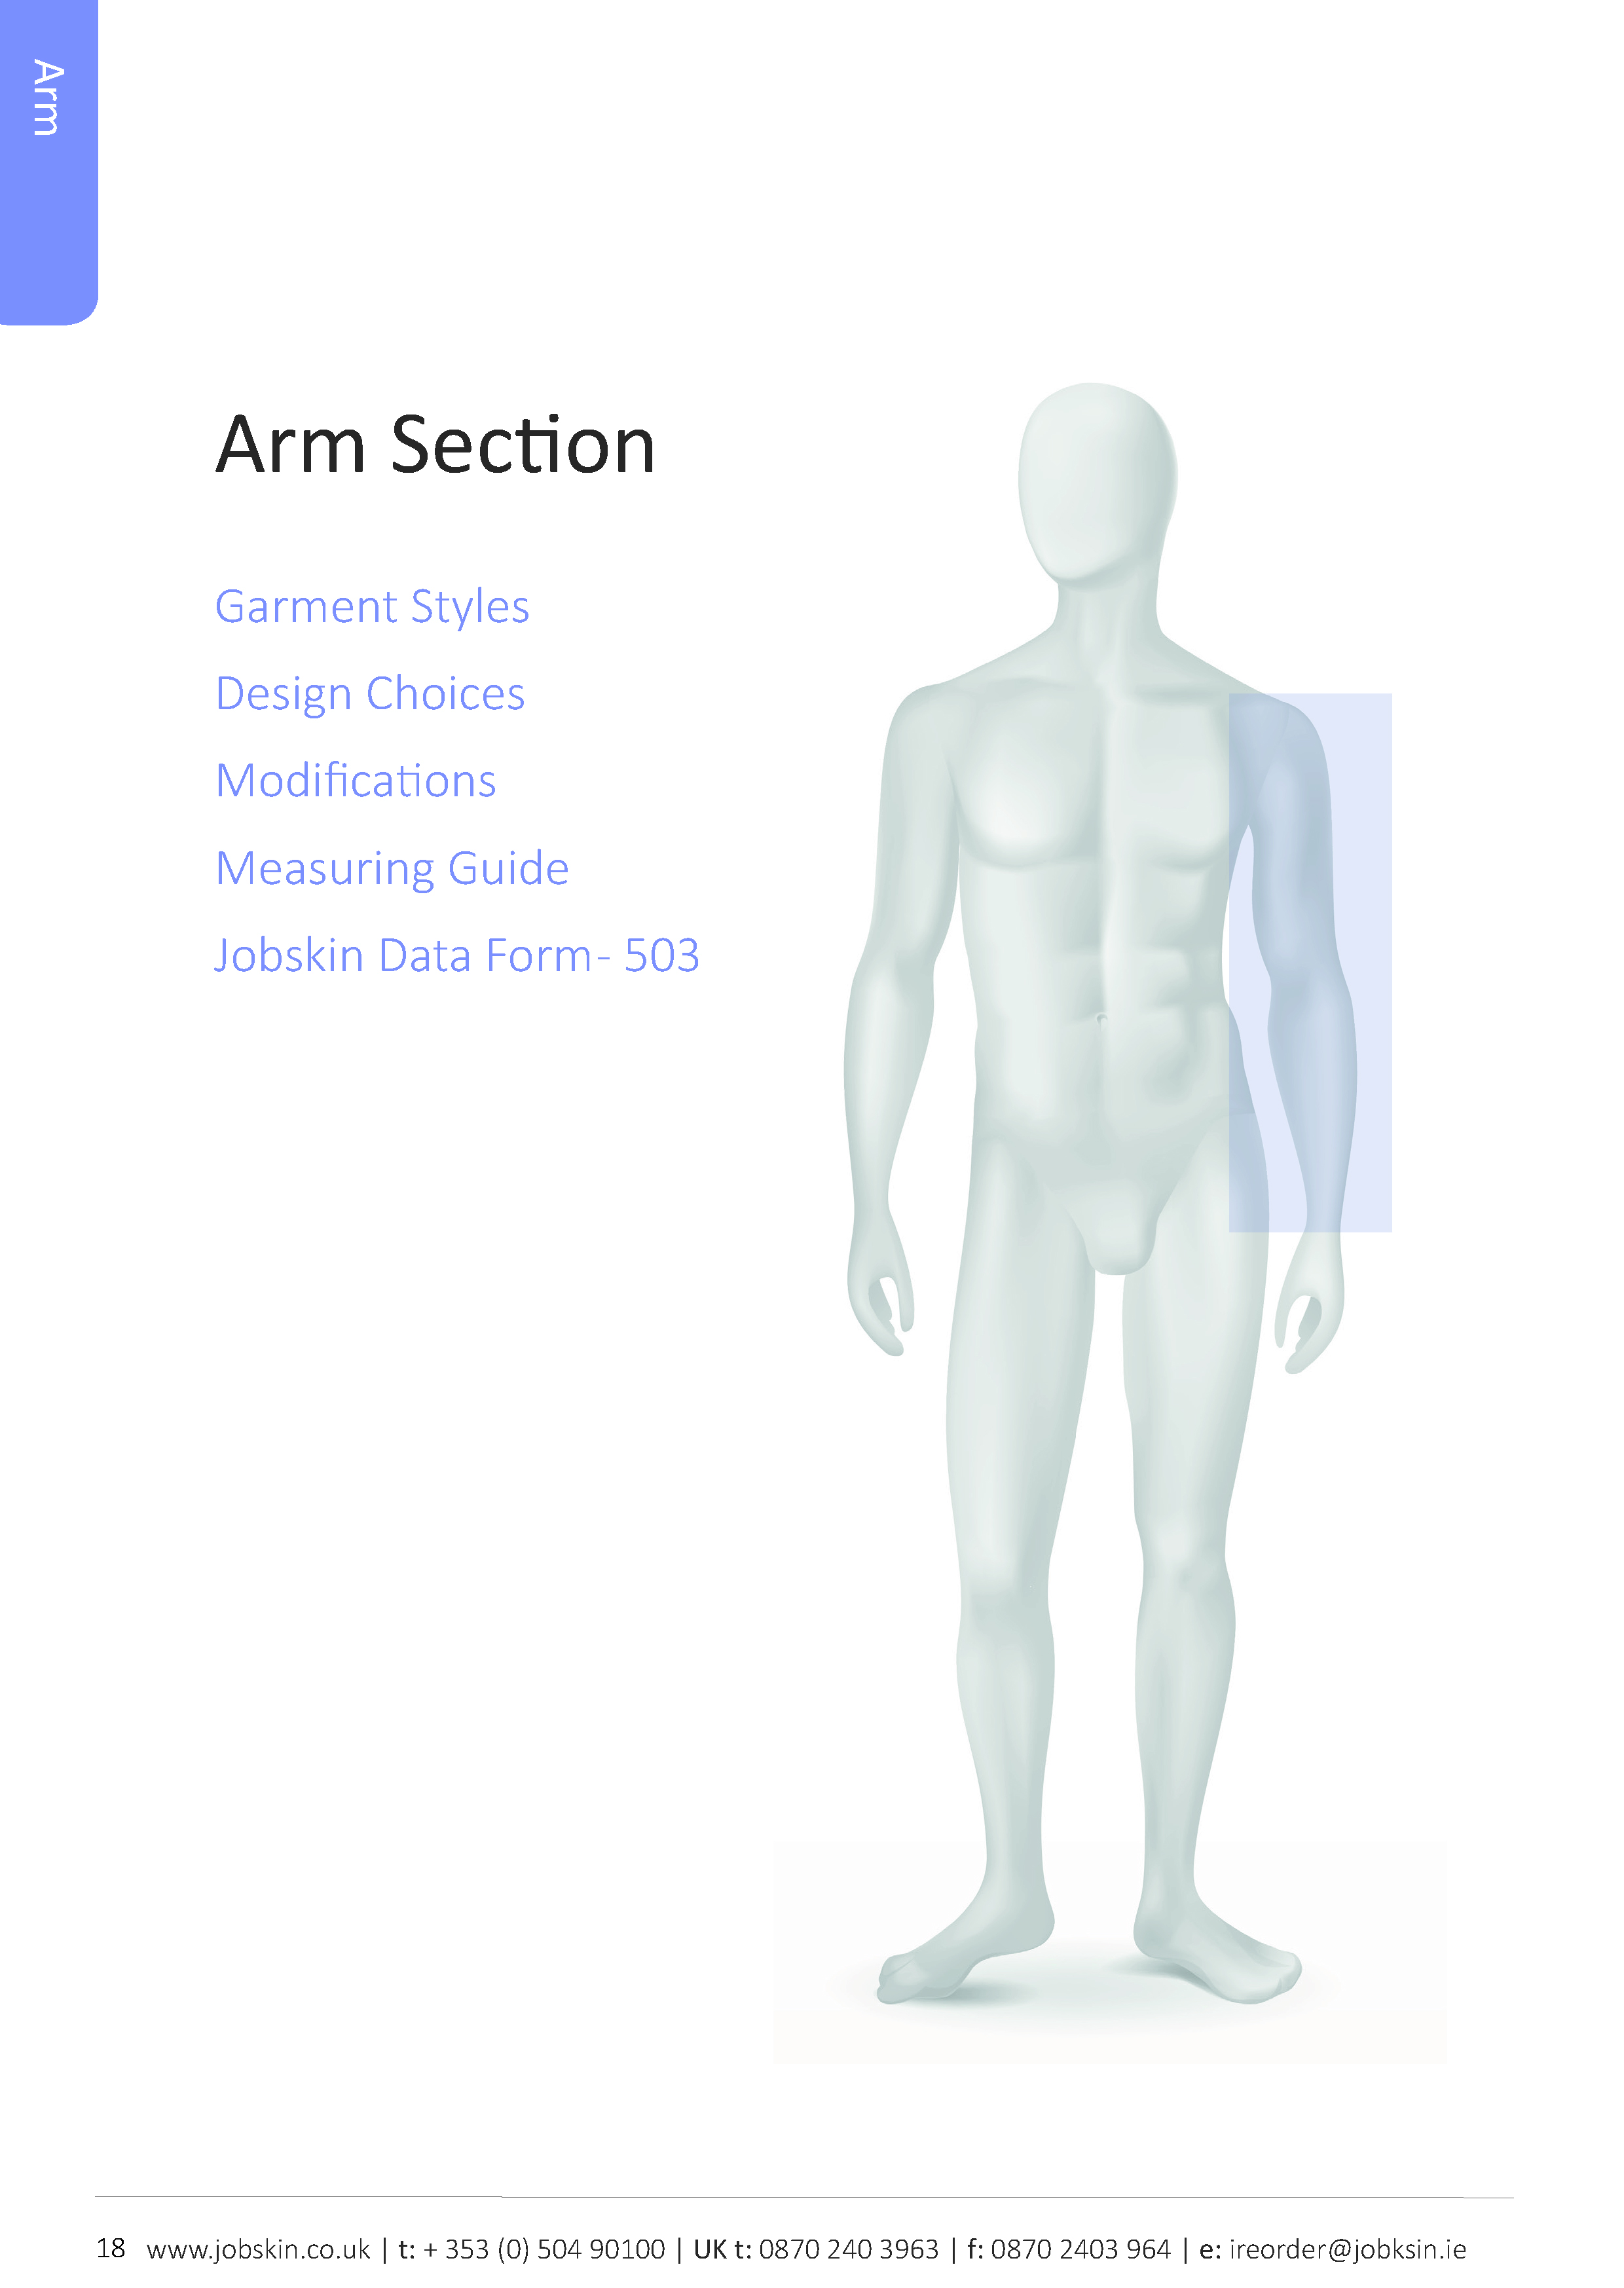 Arm Measure Guide